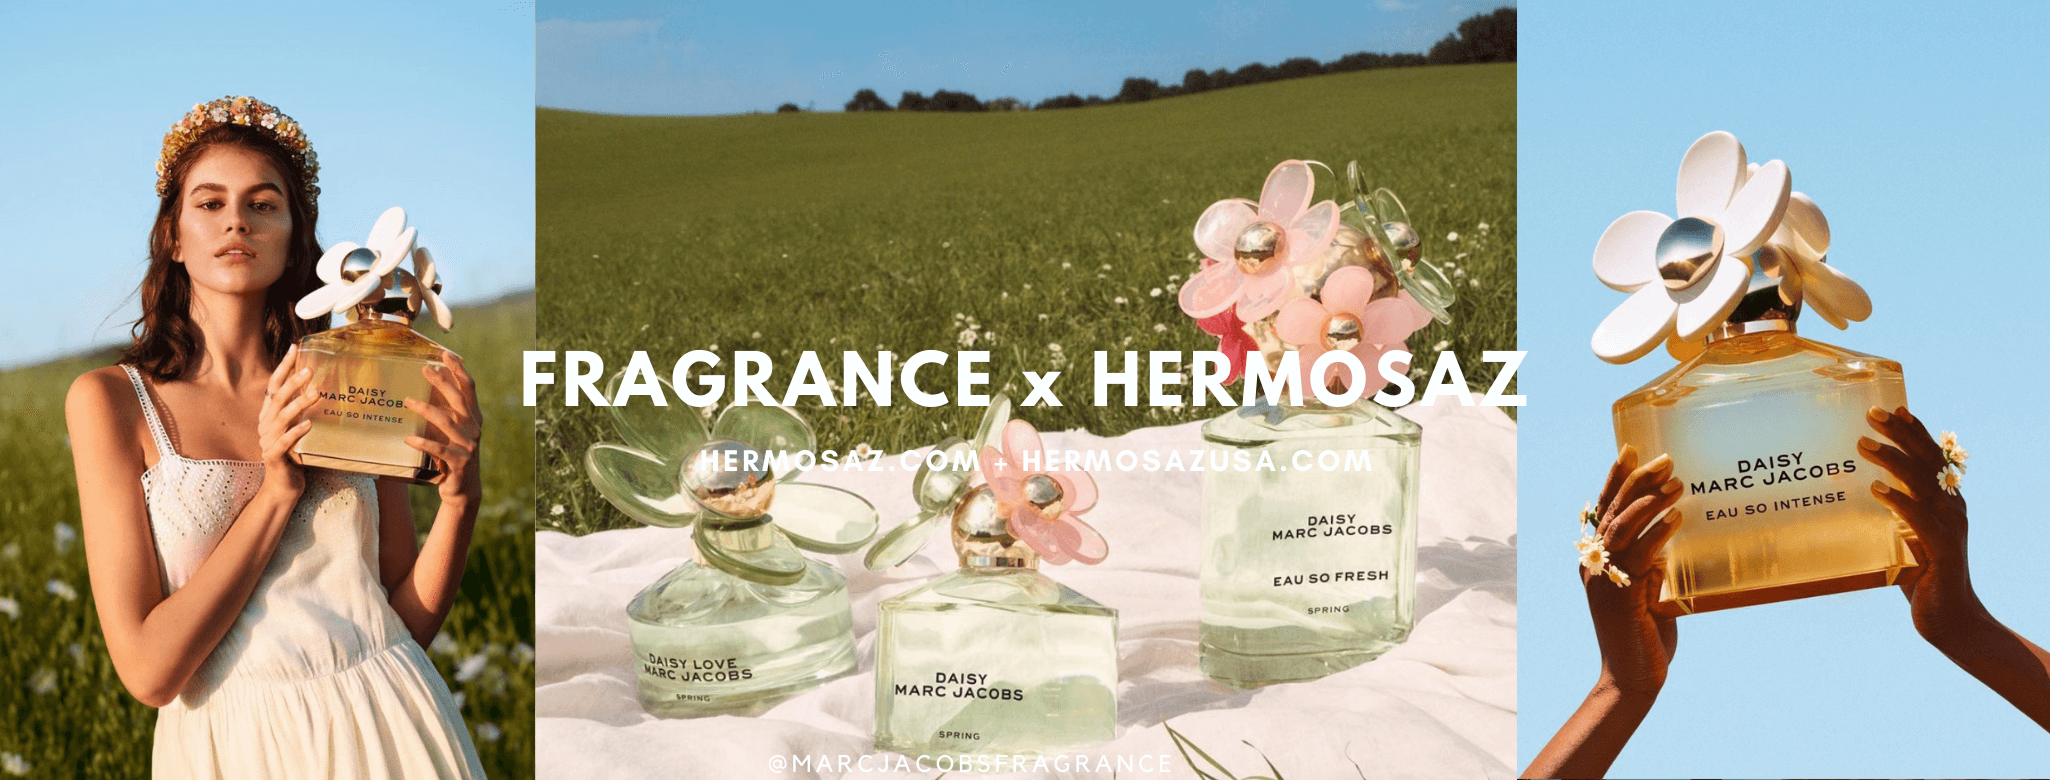 Fragrance x Hermosaz